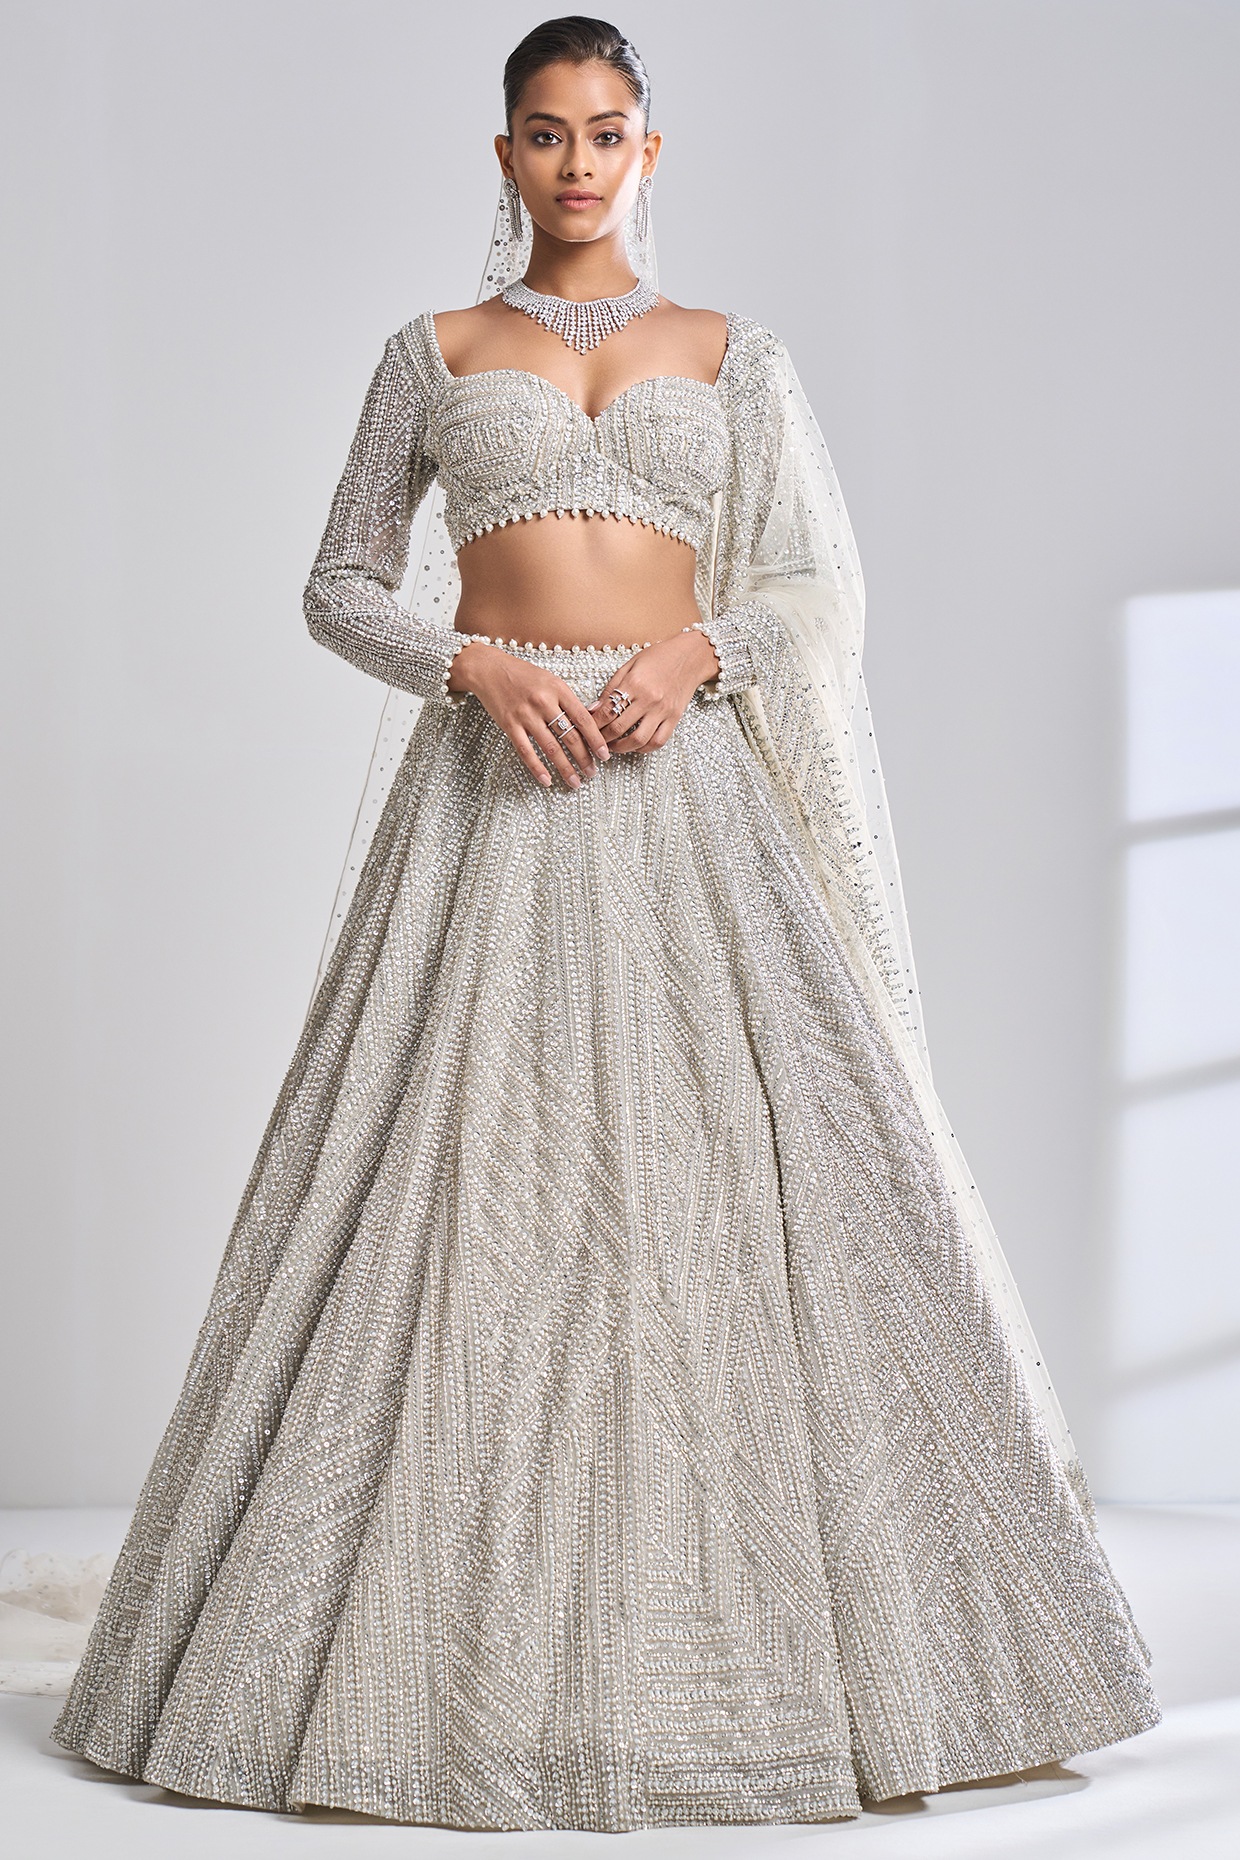 Buy White Silver Lehenga Skirt With Blouse. Indian Ethnic Clothes.  Georgette Banarasi Printed Lehenga Online in India - Etsy